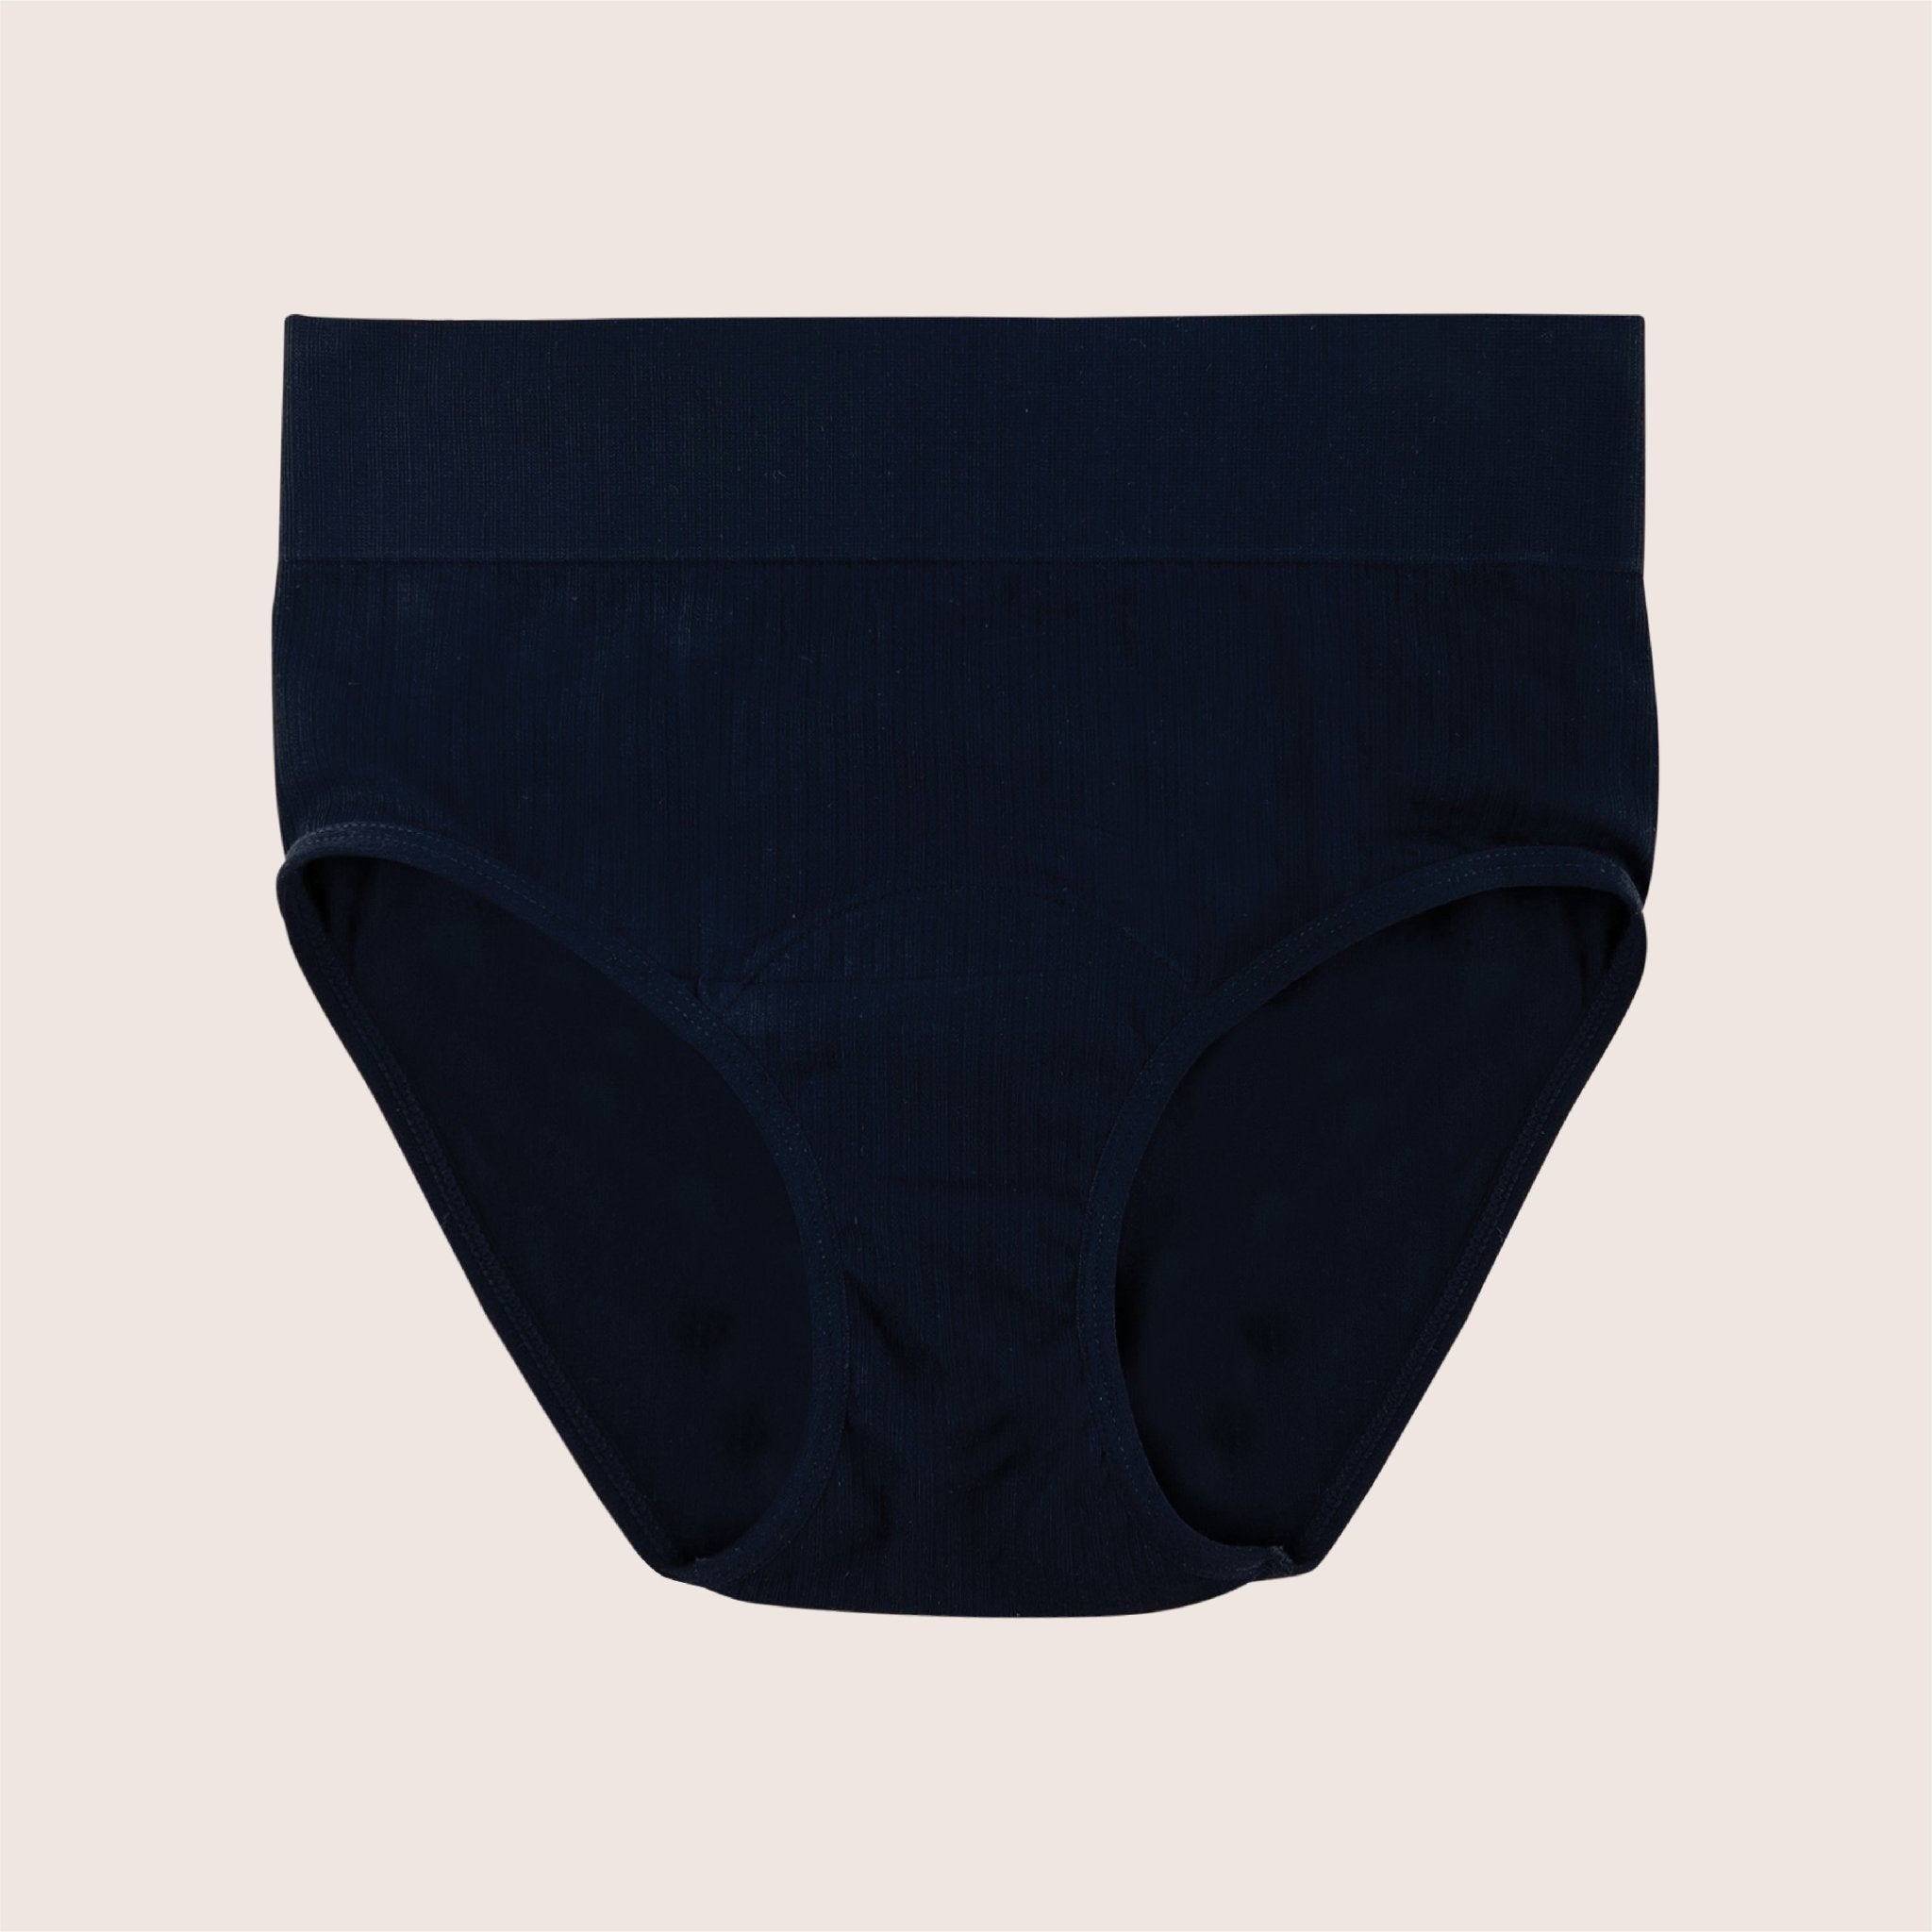 Super Comfy High-waisted Period Underwear